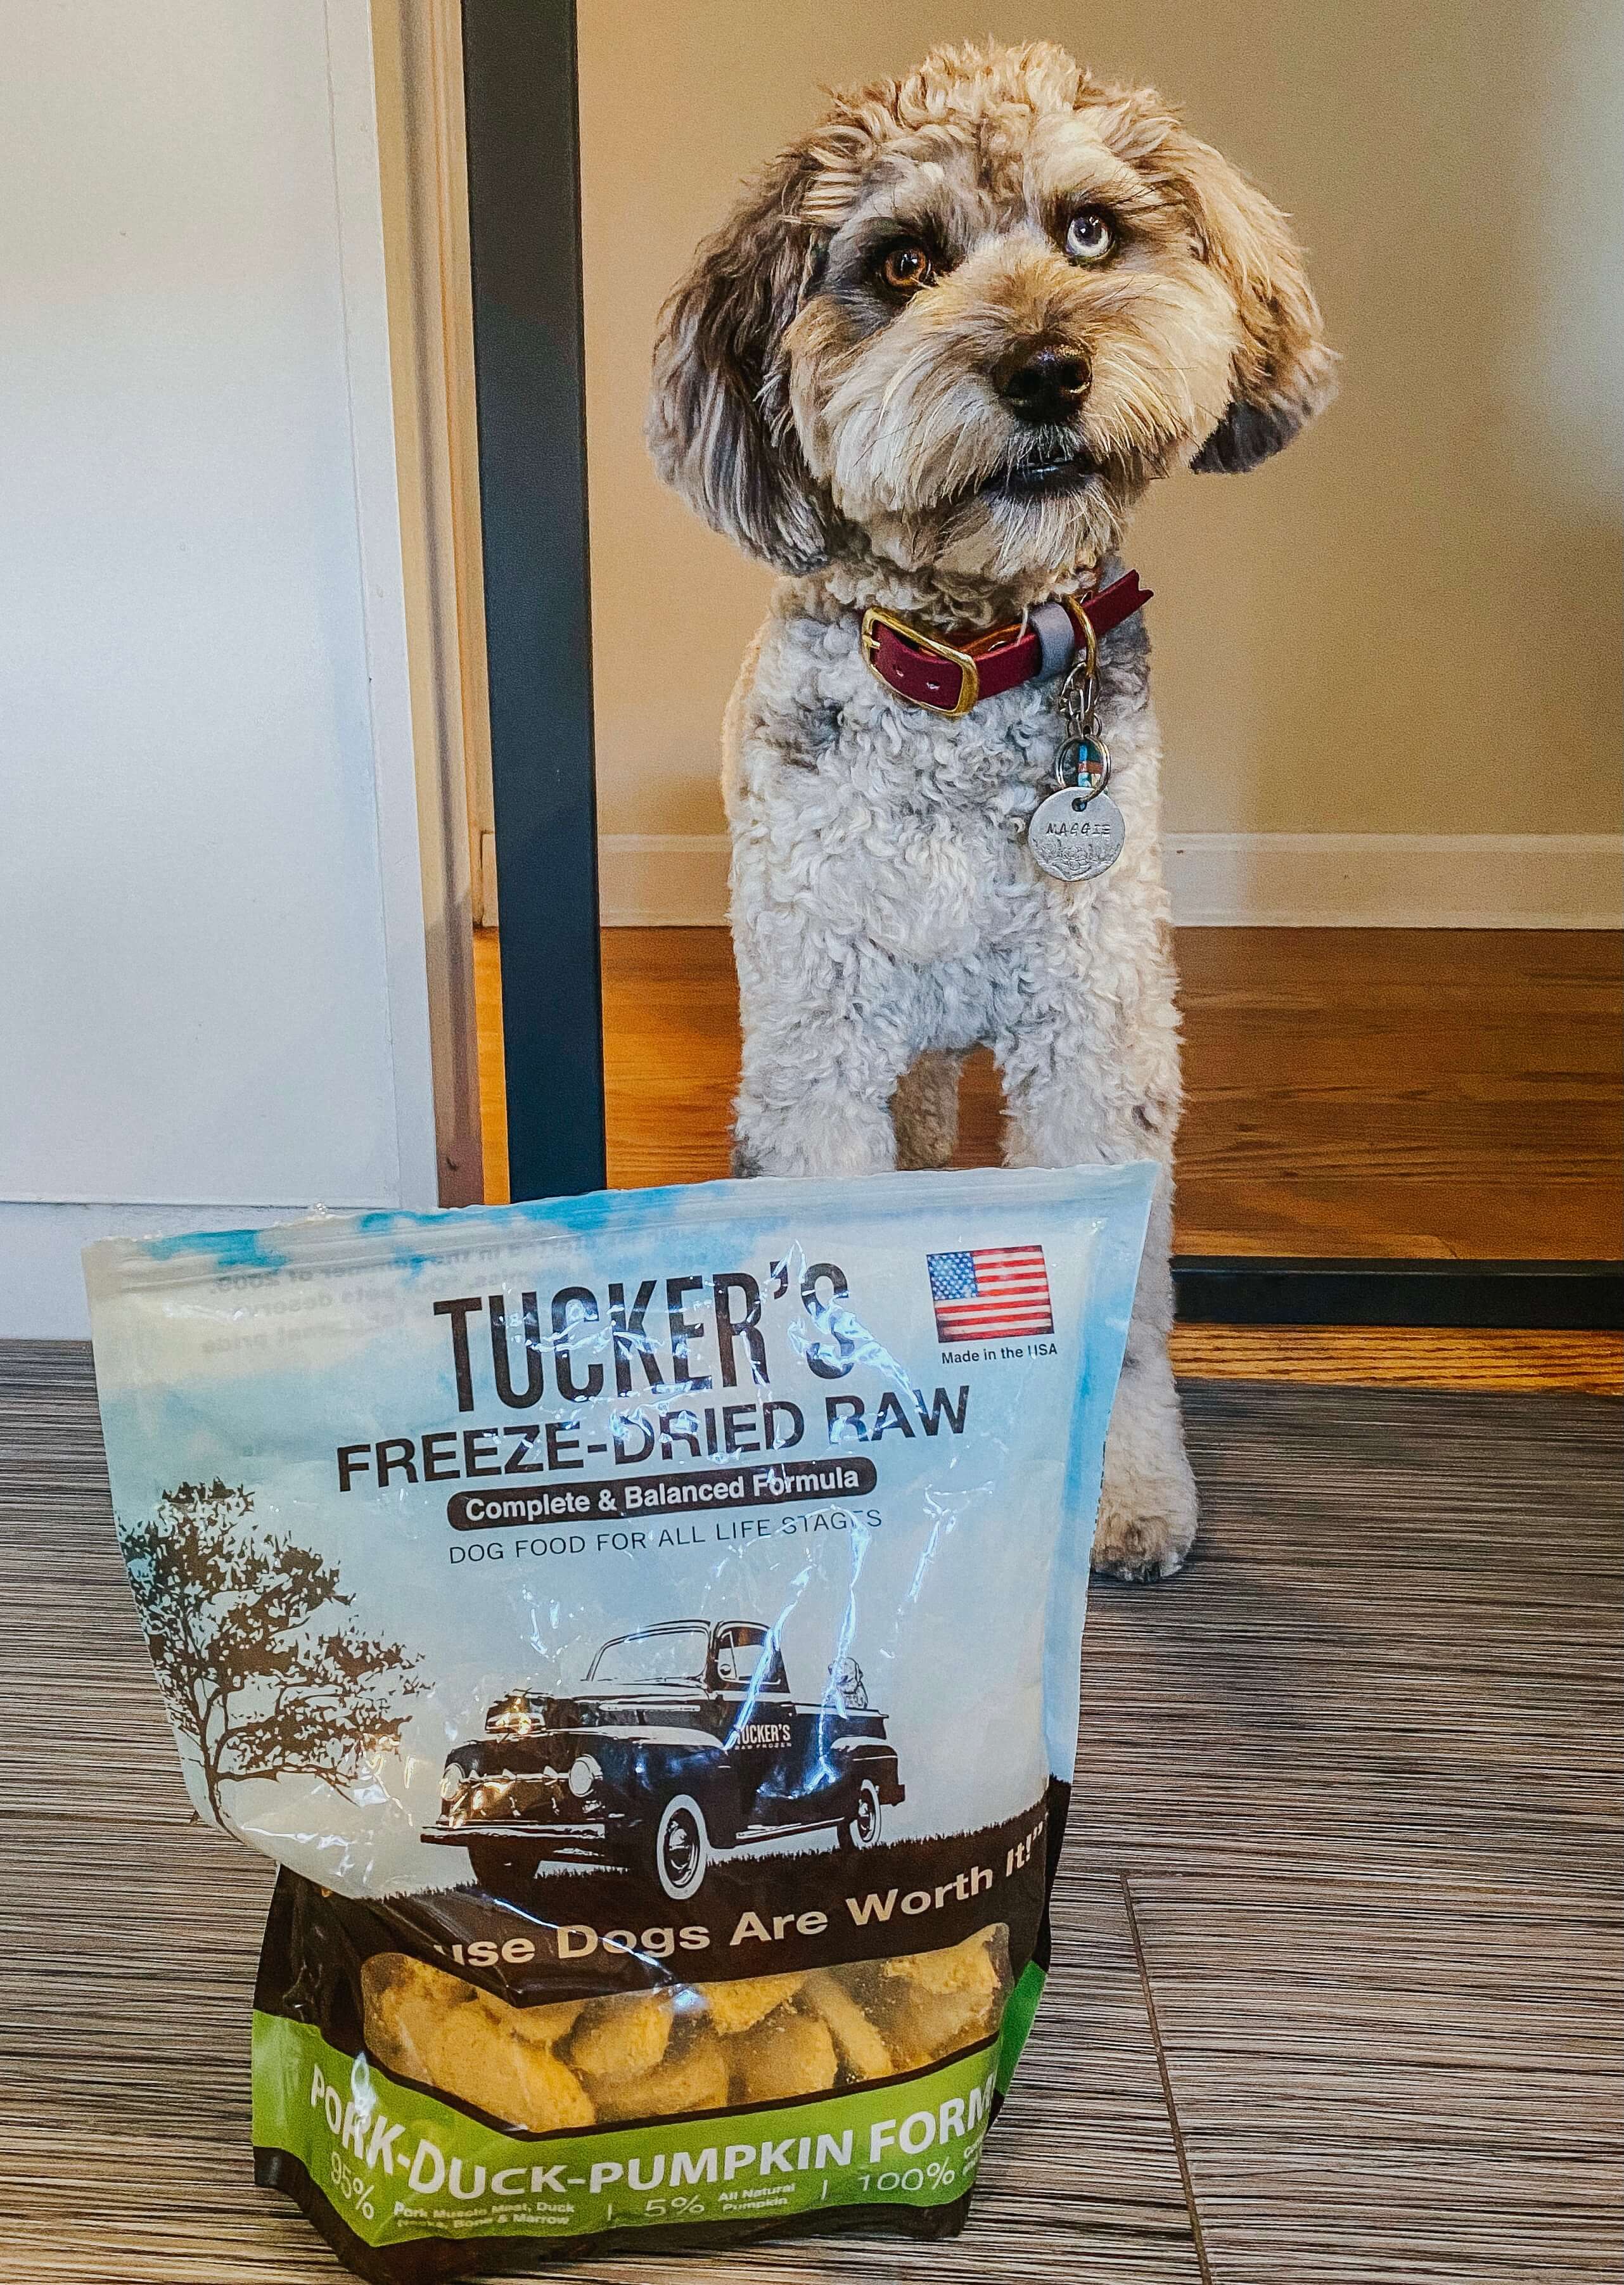 Medium dog with Tucker's pork duck pumpkin